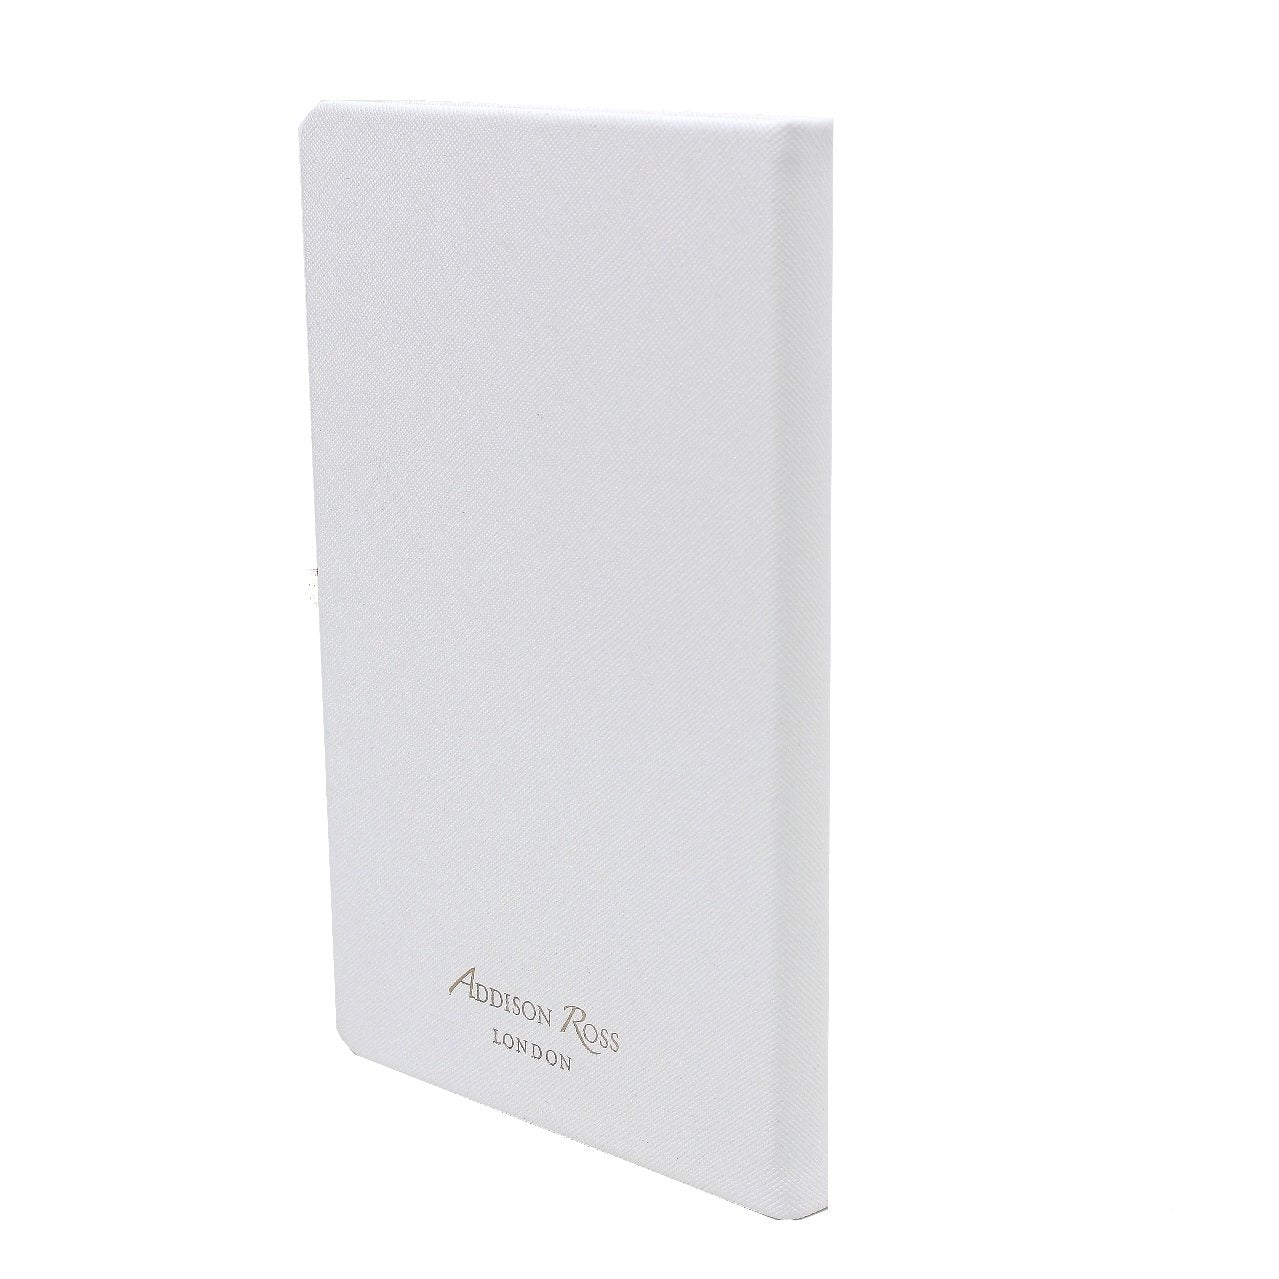 White & Gold Notebook - Notebooks - Addison Ross